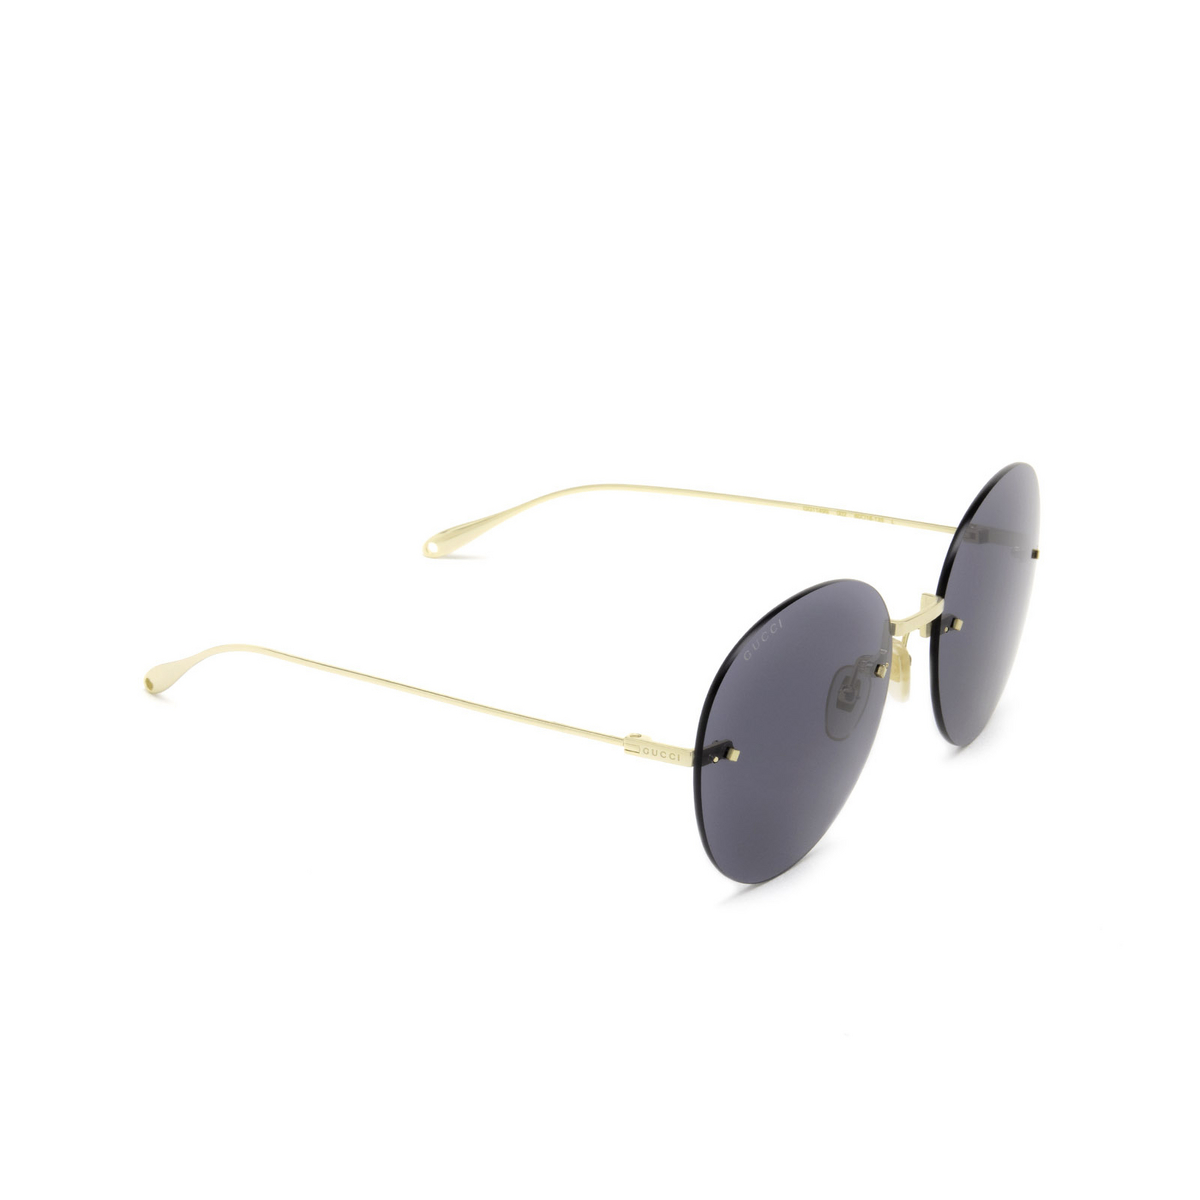 Gucci® Round Sunglasses: GG1149S color Gold 002 - three-quarters view.